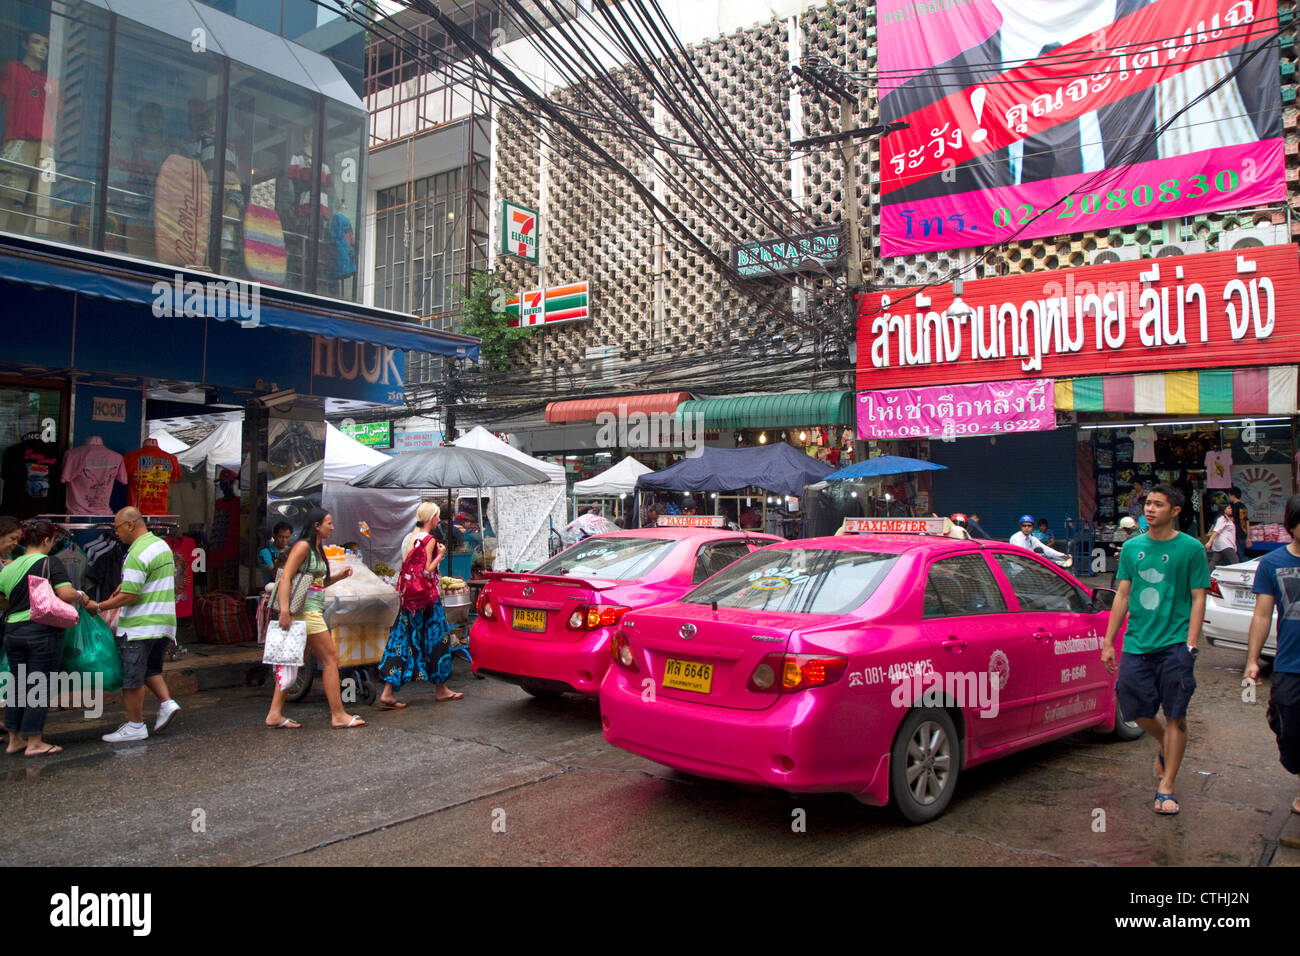 Pink taxi cabs in Bangkok, Thailand. Stock Photo